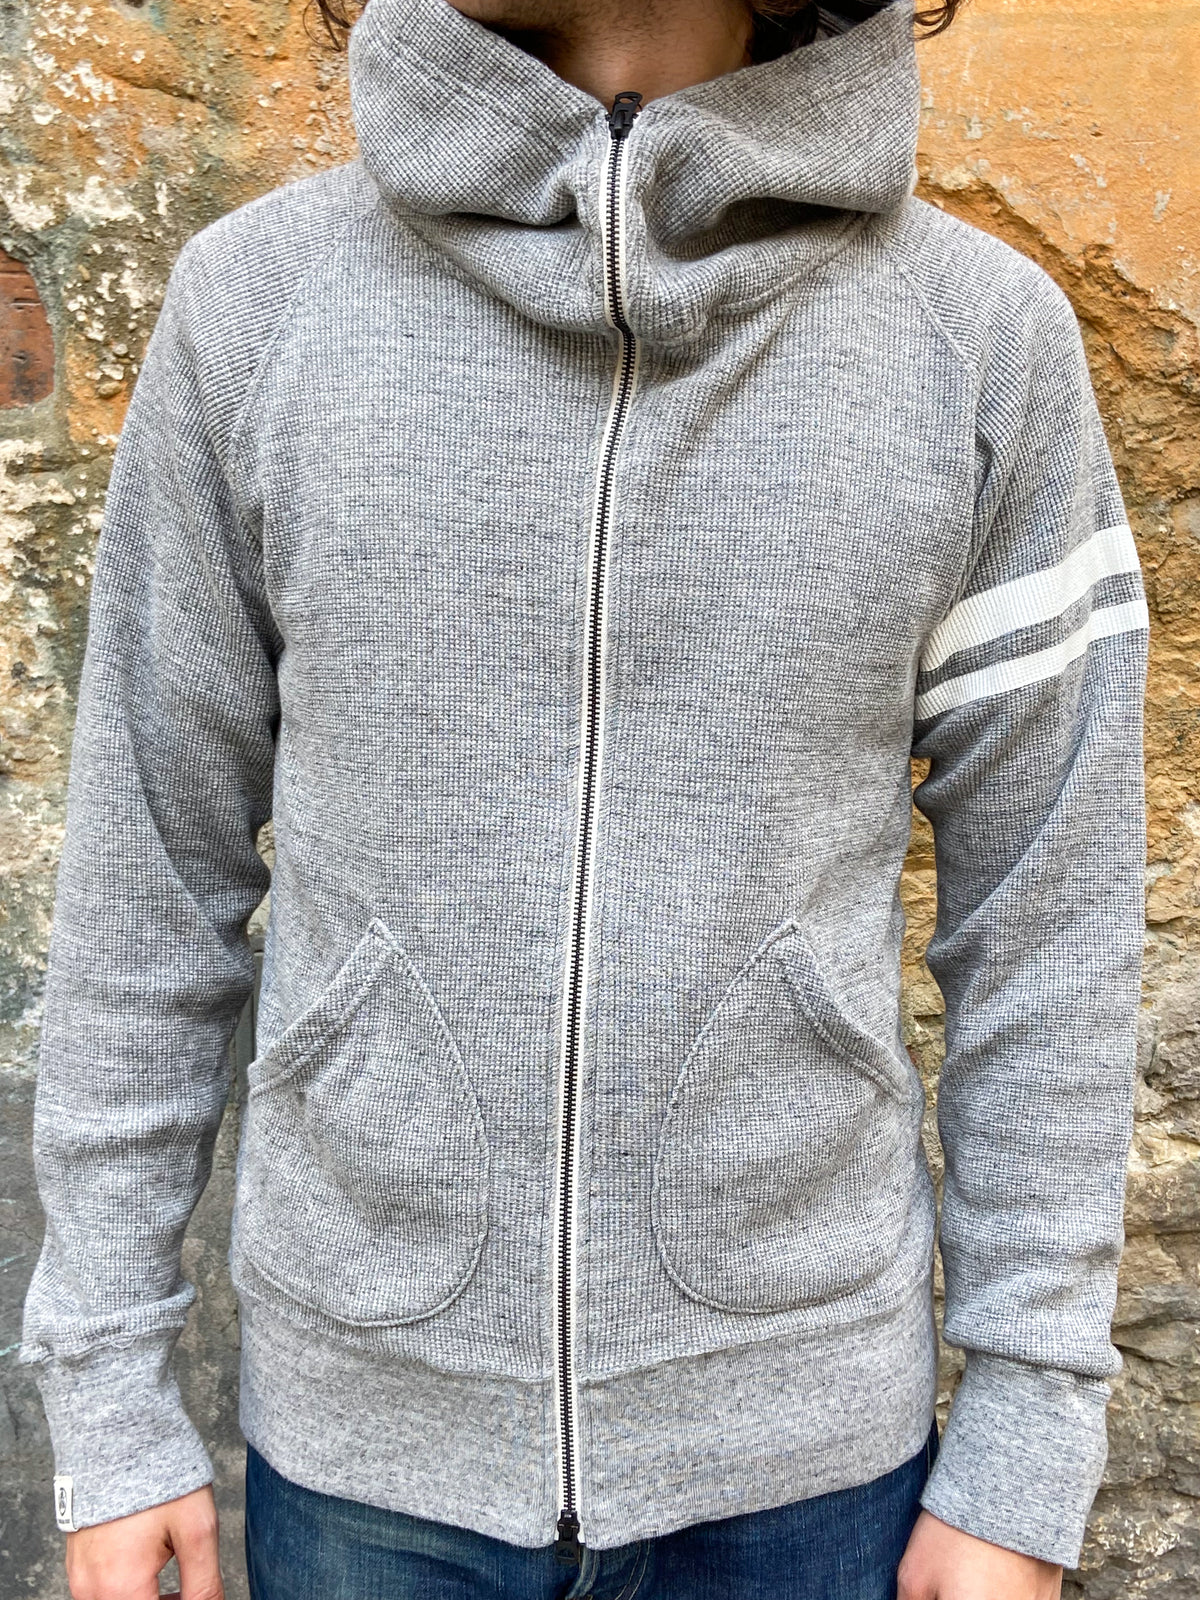 Momotaro 07-045 Thermal Hooded Sweatshirt Grey